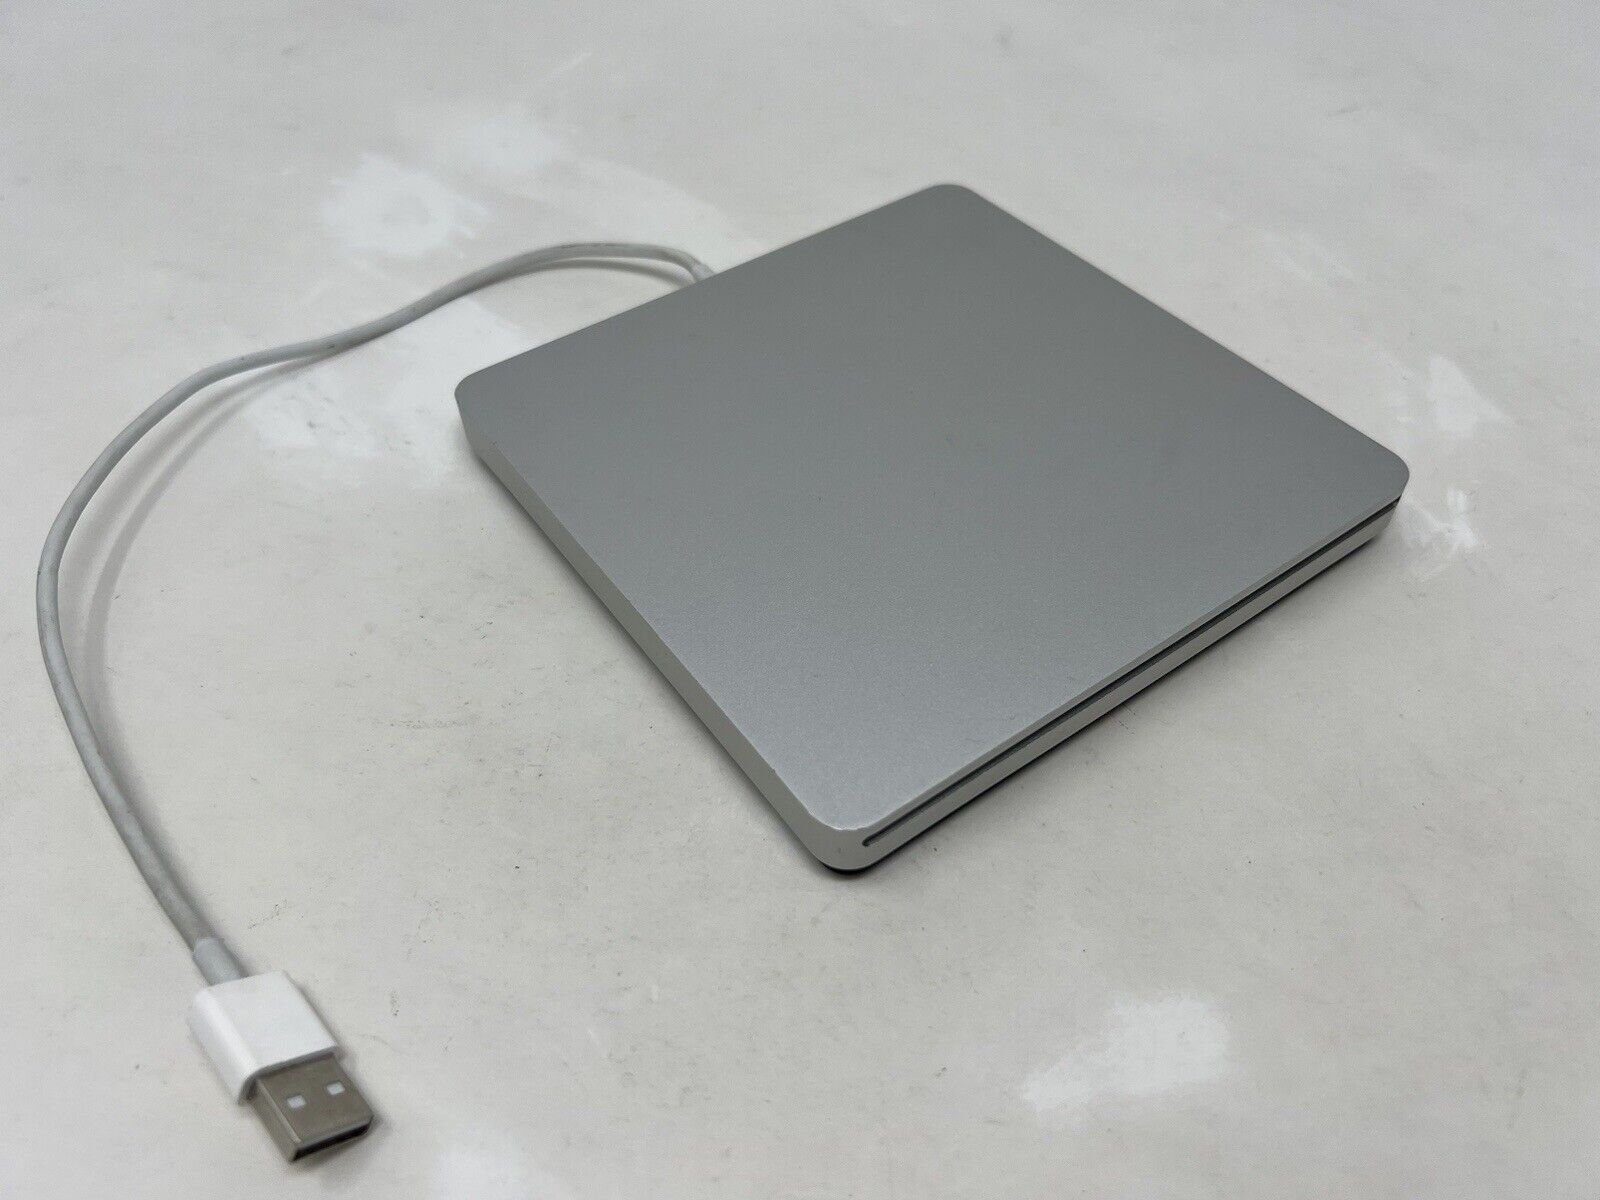 Genuine Apple External USB SuperDrive DVD-RW CD iMac MacBook A1379 MD564LL/A